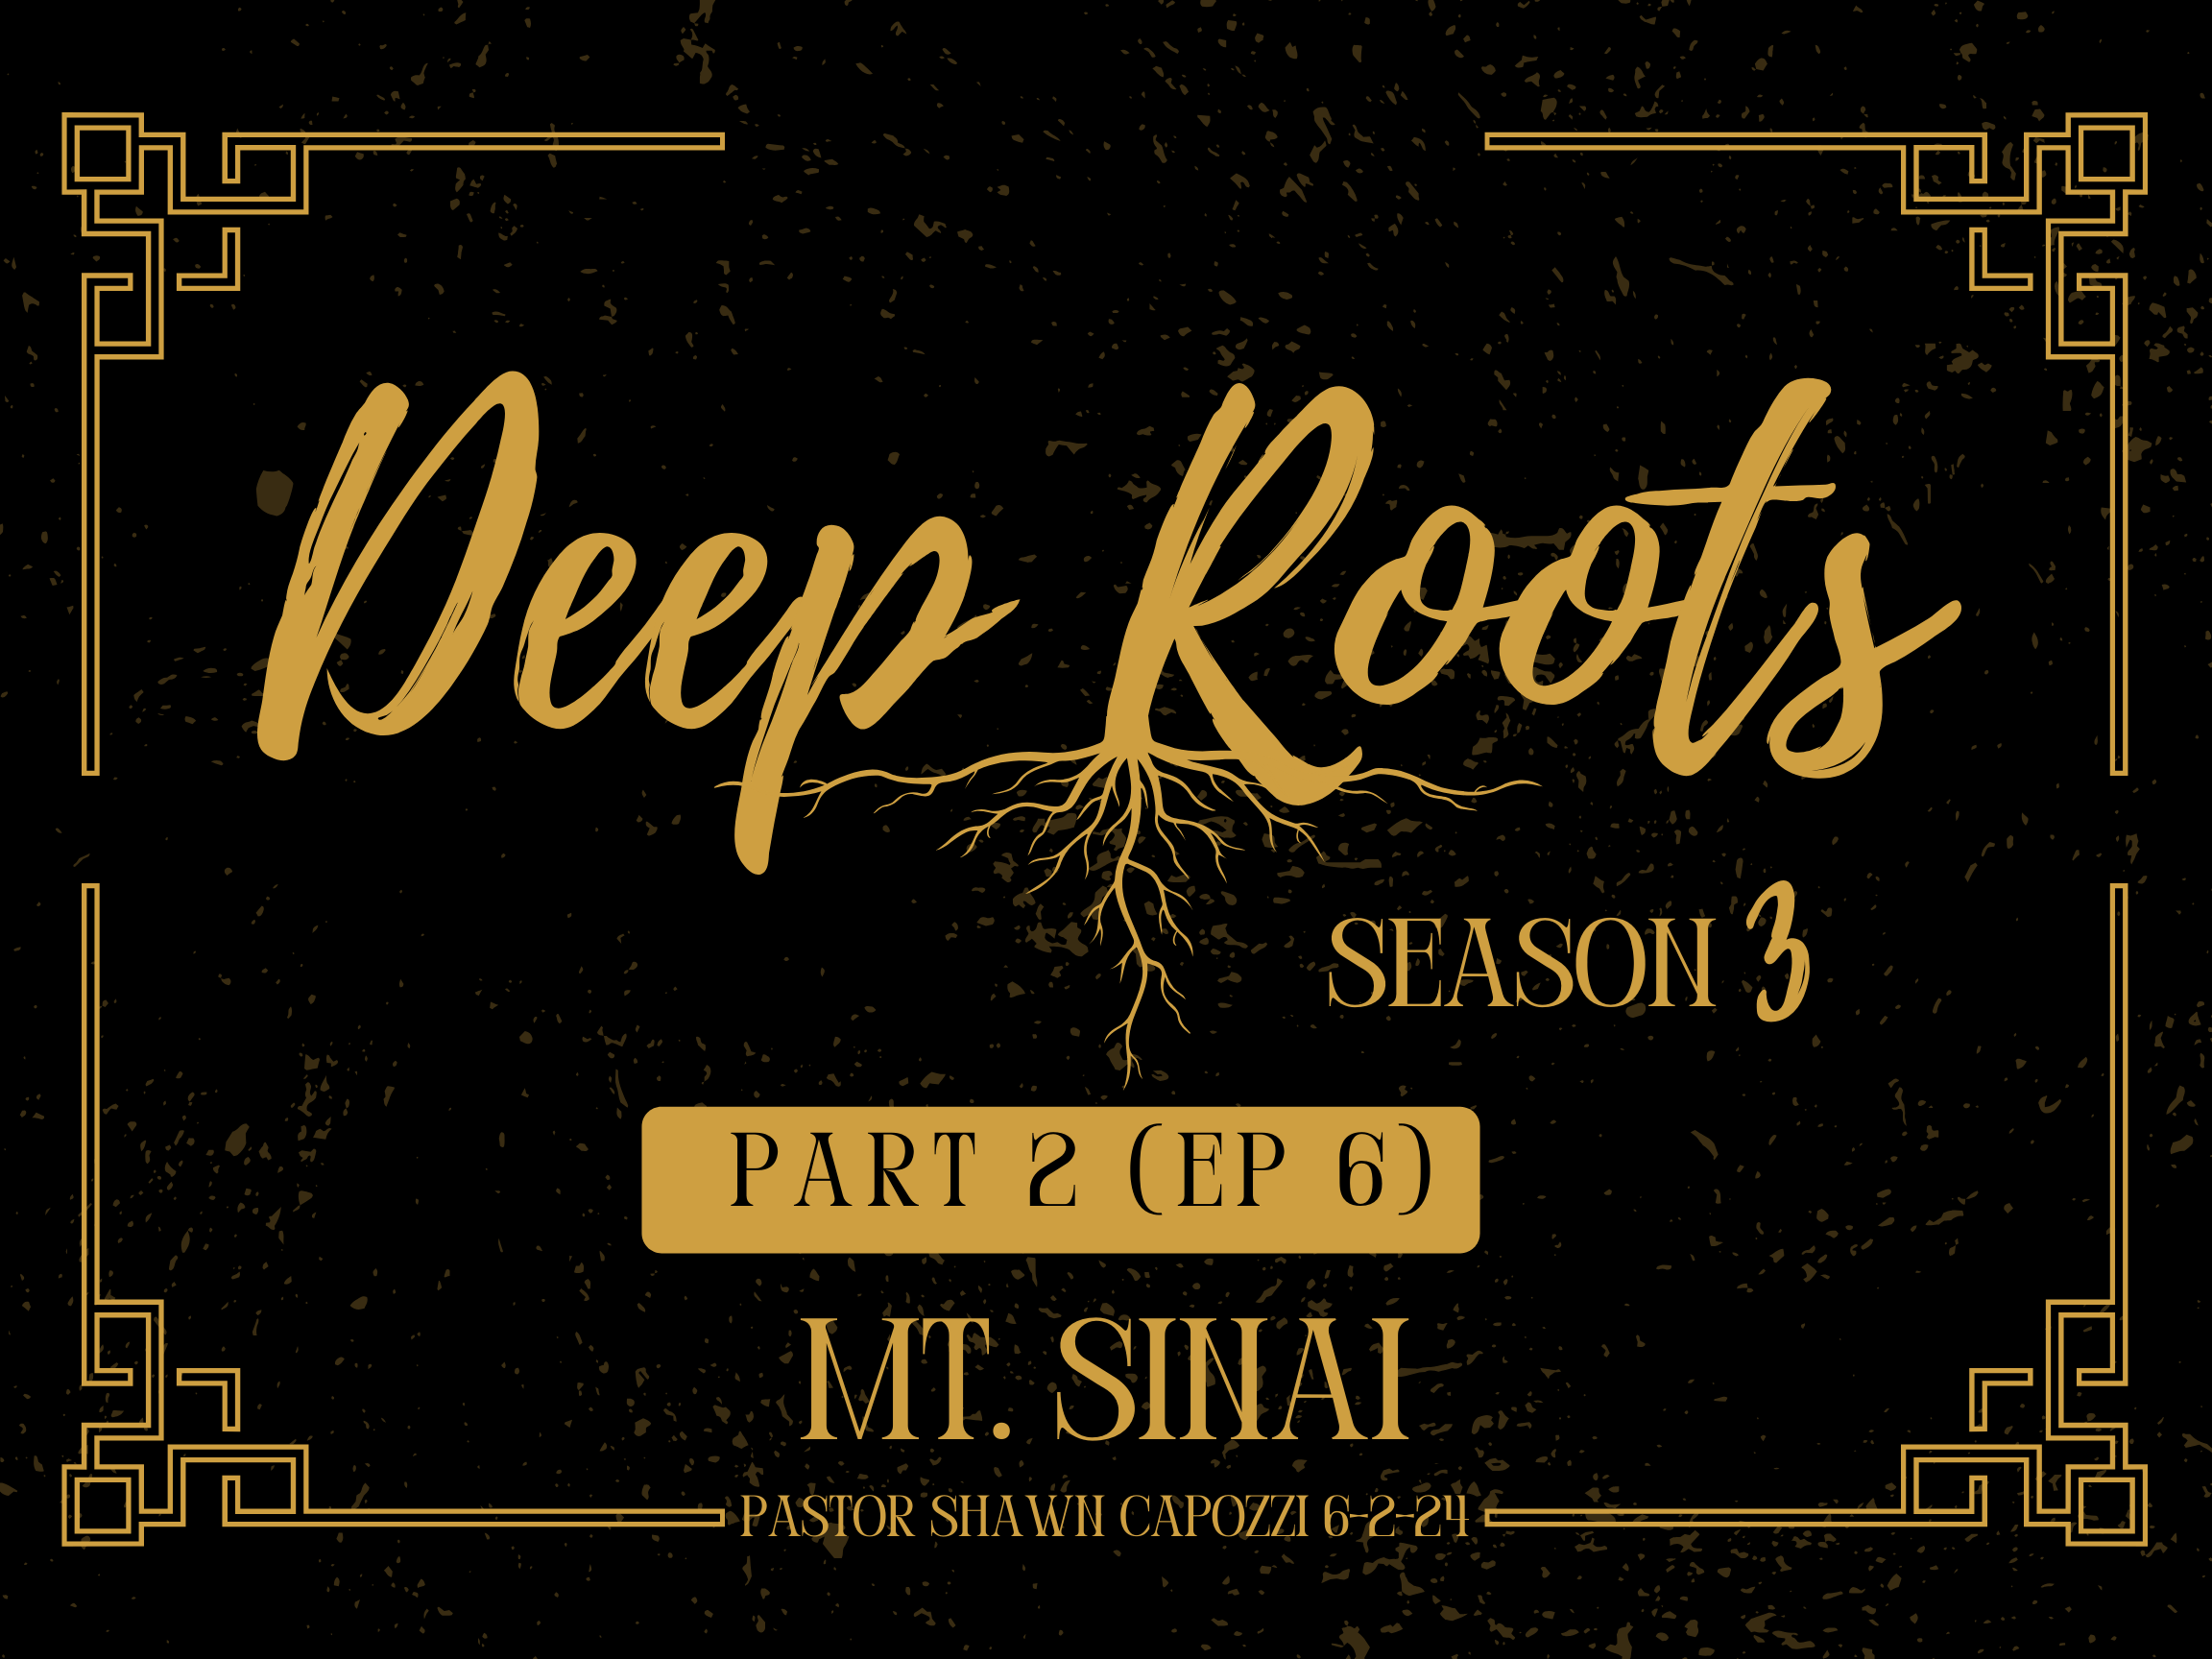 Deep Roots S3 Pt.2 E6 Mt. Sinai